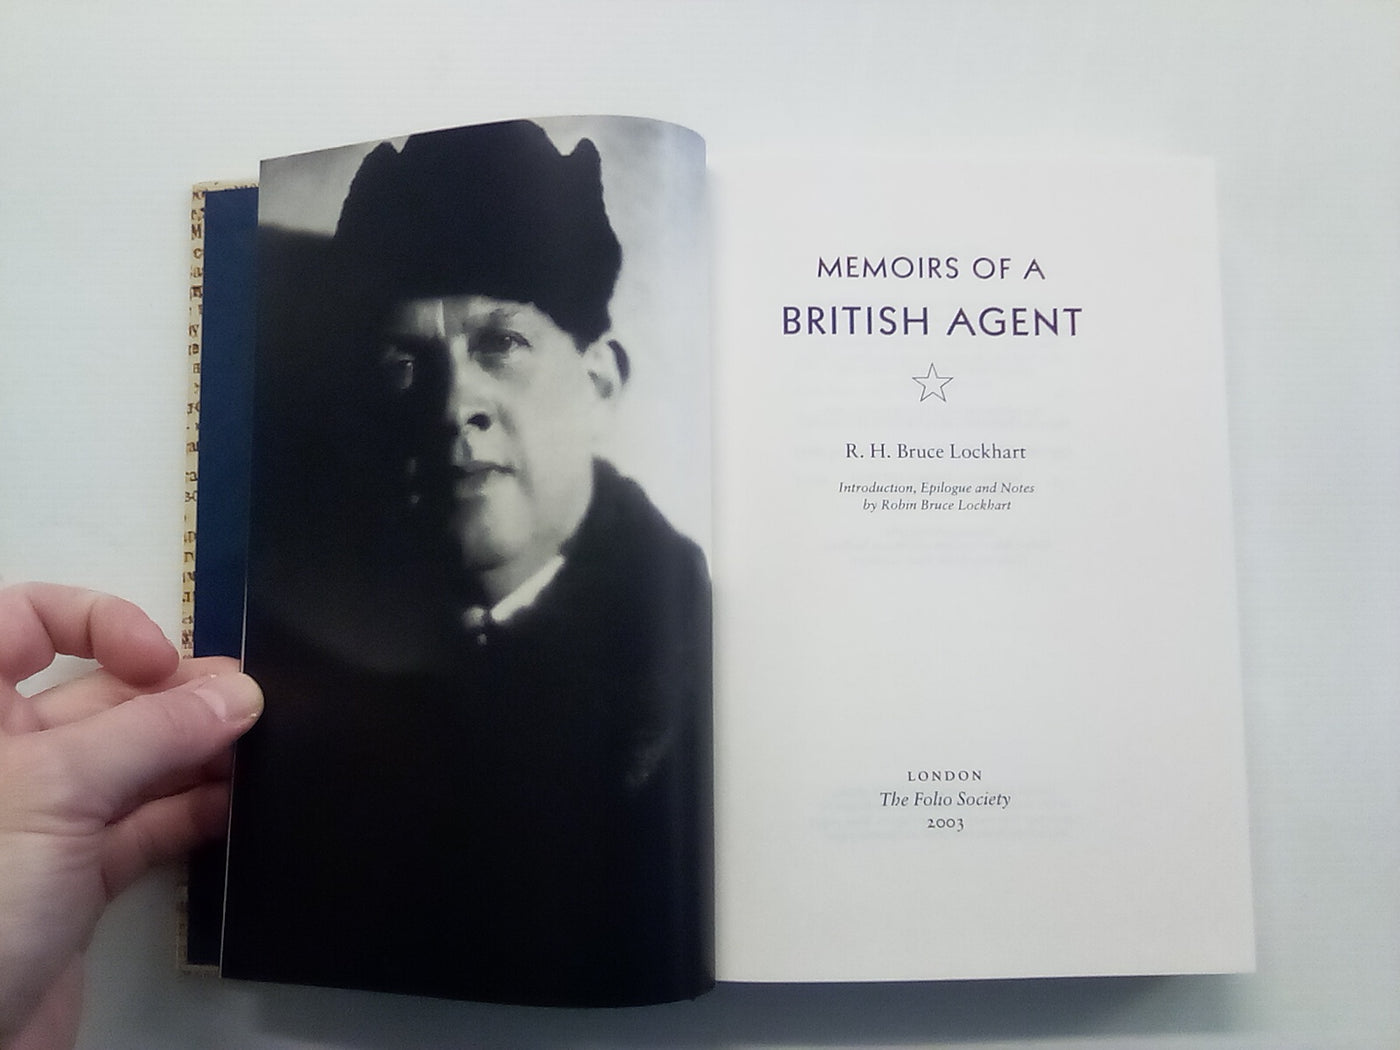 Folio Society - Memoirs of a British Agent by Sir R.H. Bruce Lockhart